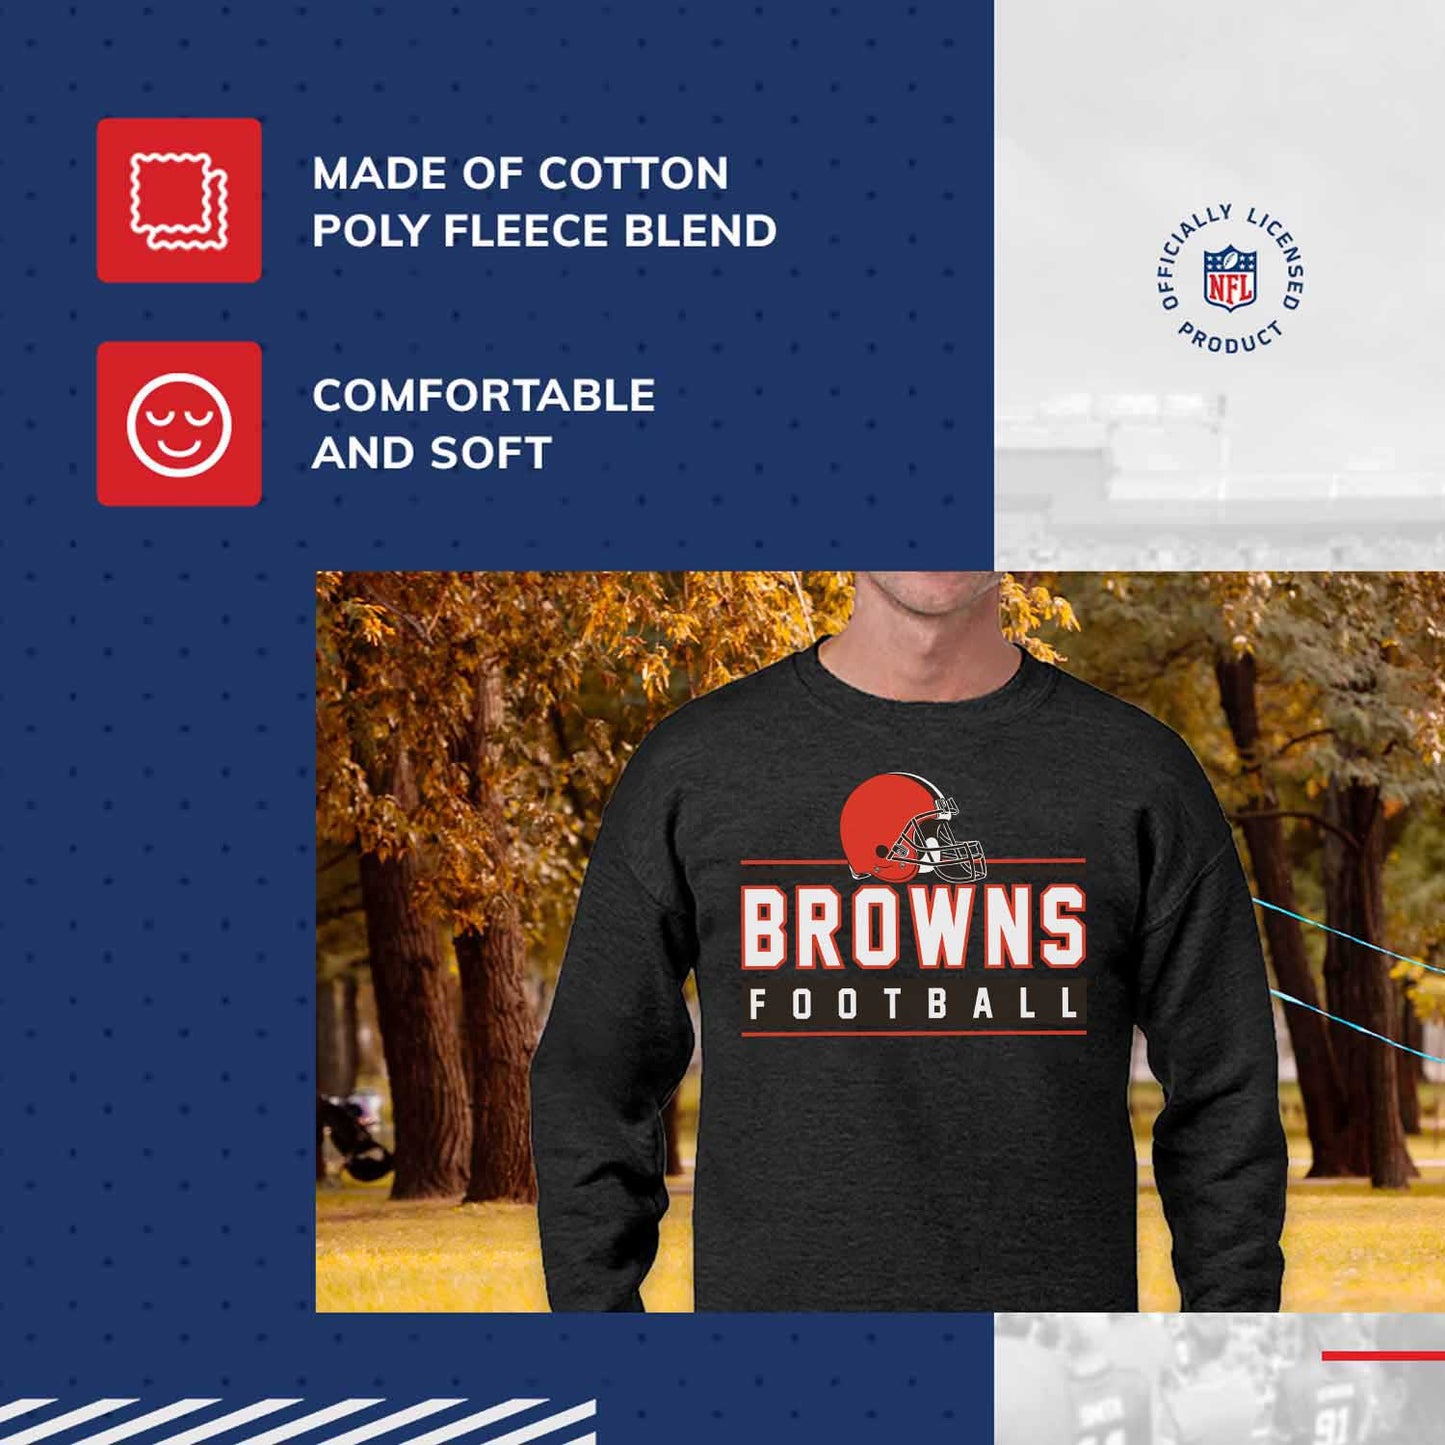 Cleveland Browns NFL Adult True Fan Crewneck Sweatshirt - Charcoal